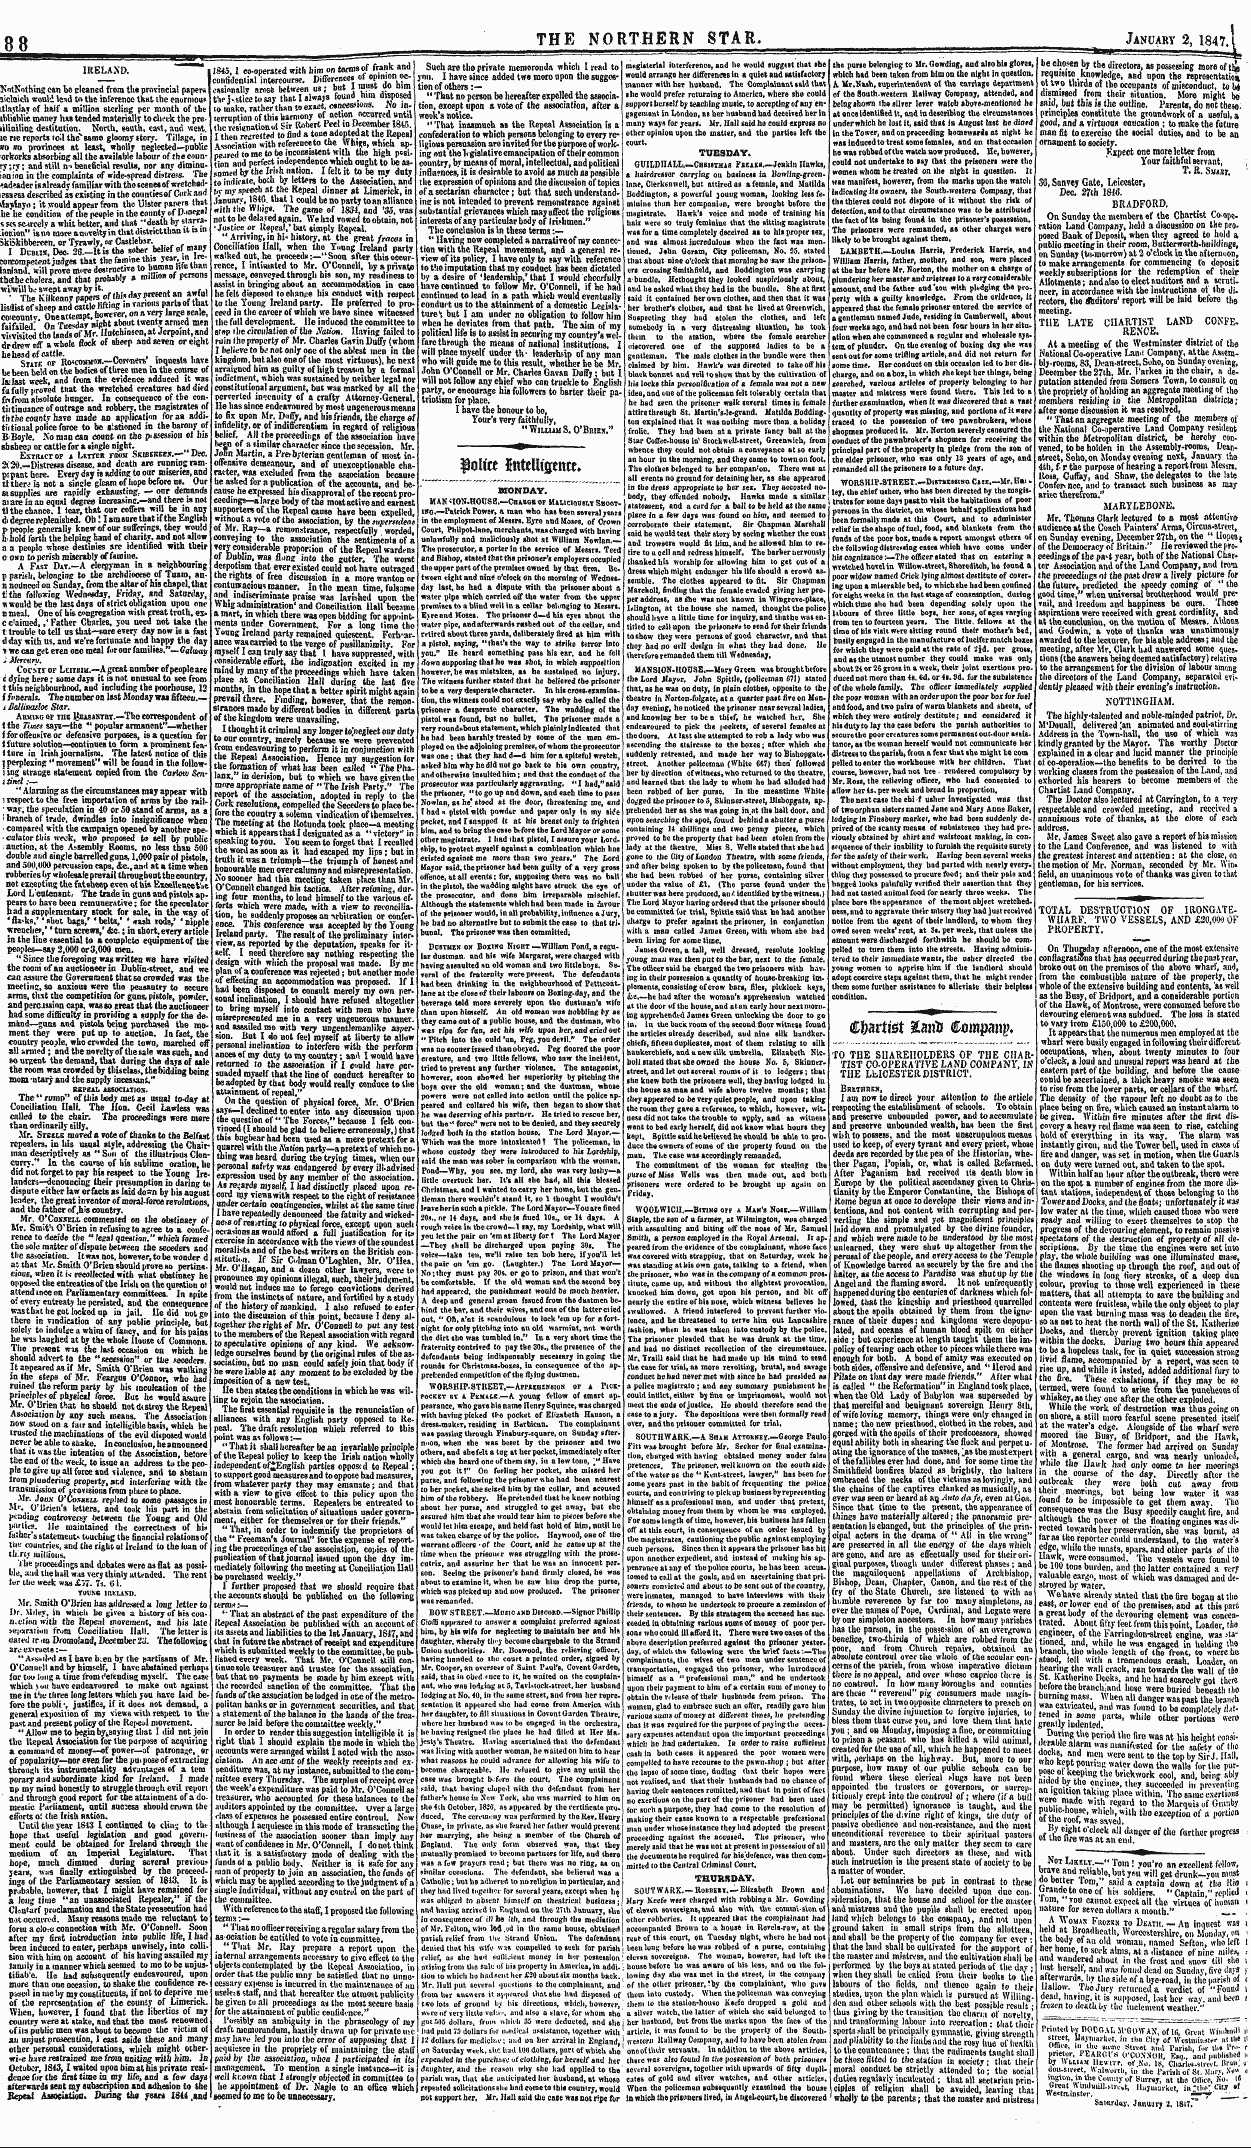 Northern Star (1837-1852): jS F Y, 2nd edition - Police Jntclugcncc*